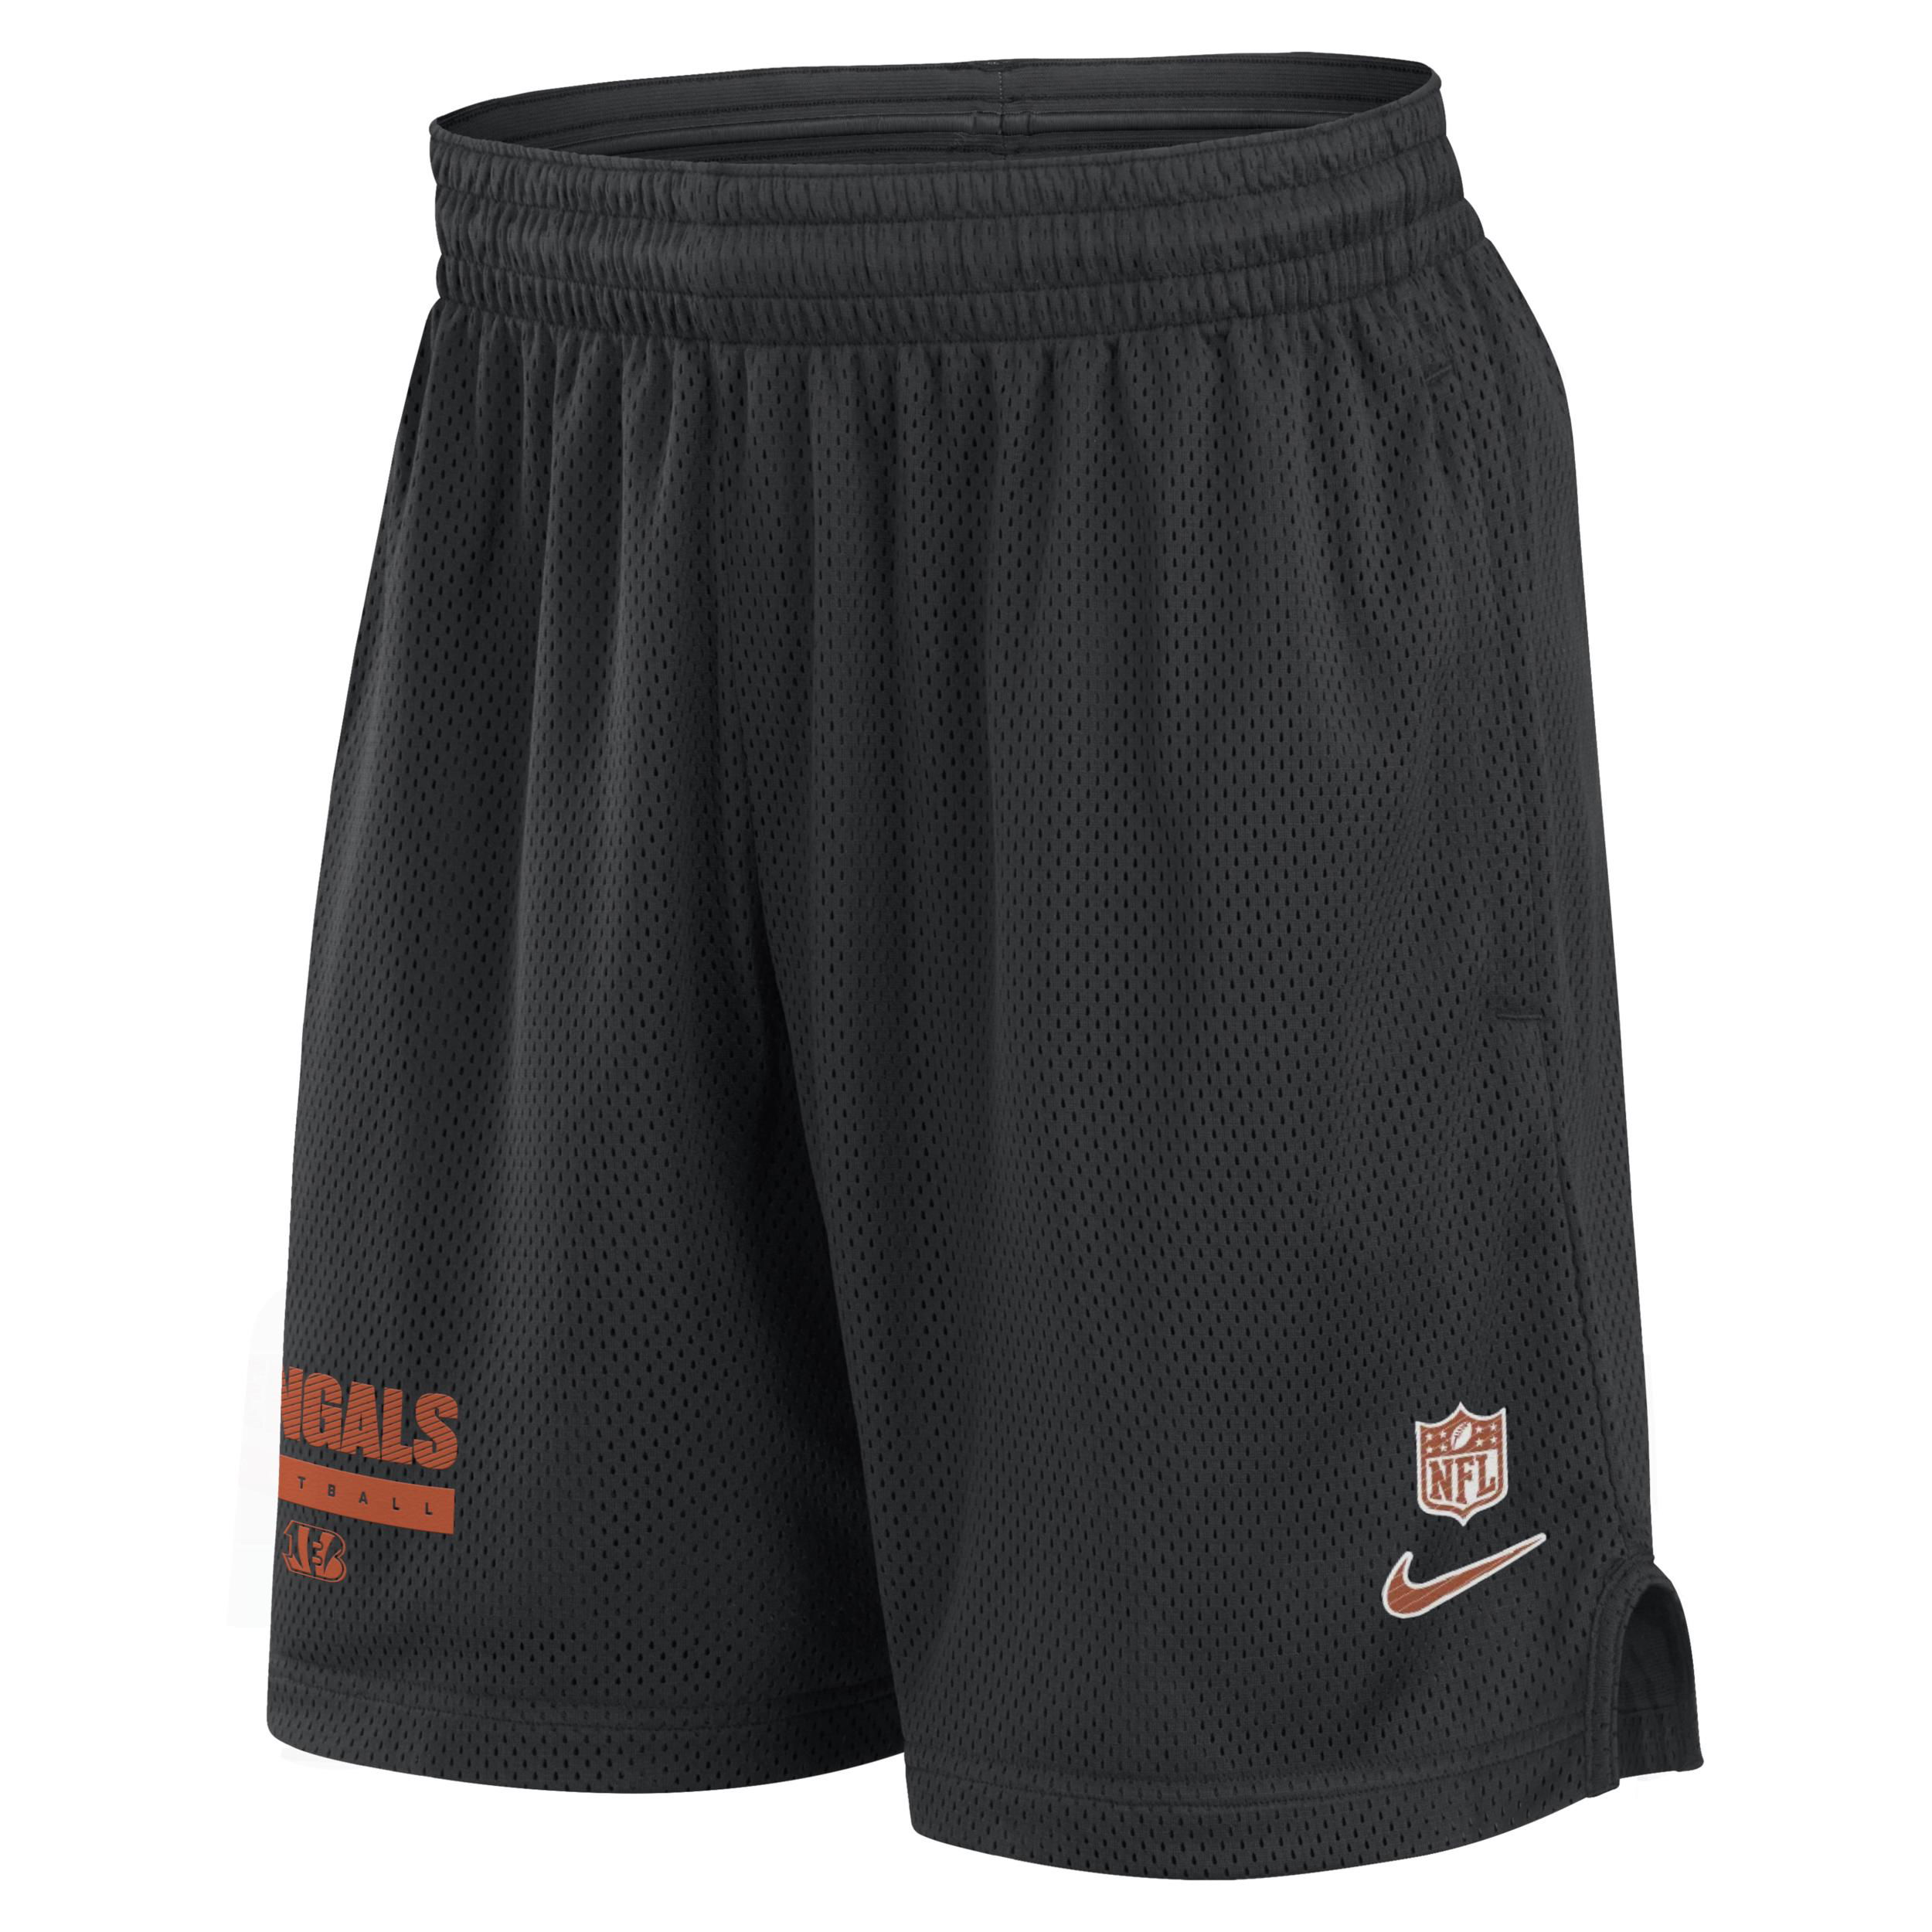 Cincinnati Bengals Sideline Nike Men's Dri-FIT NFL Shorts by NIKE